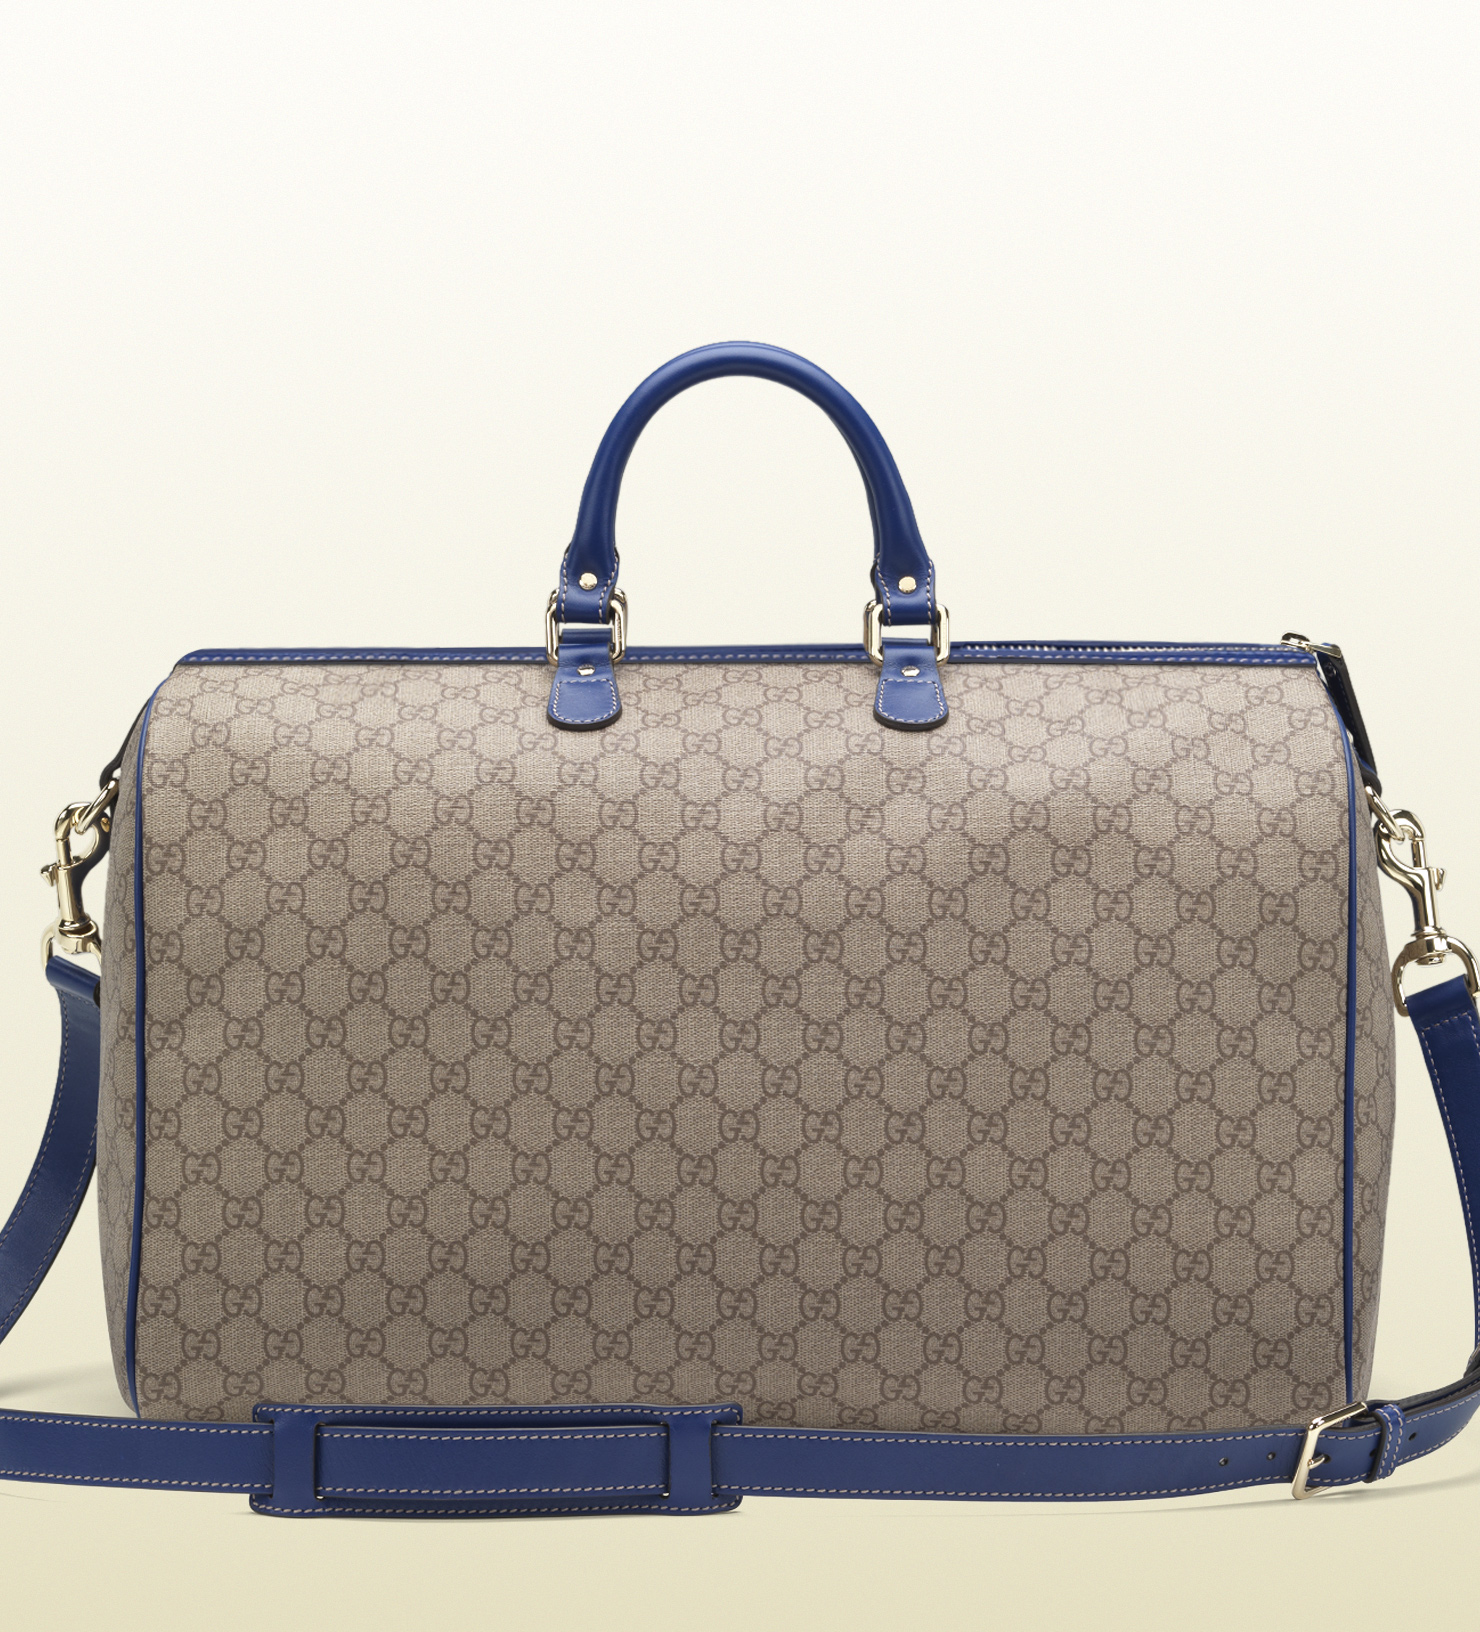 Gucci Handbags Usa | SEMA Data Co-op